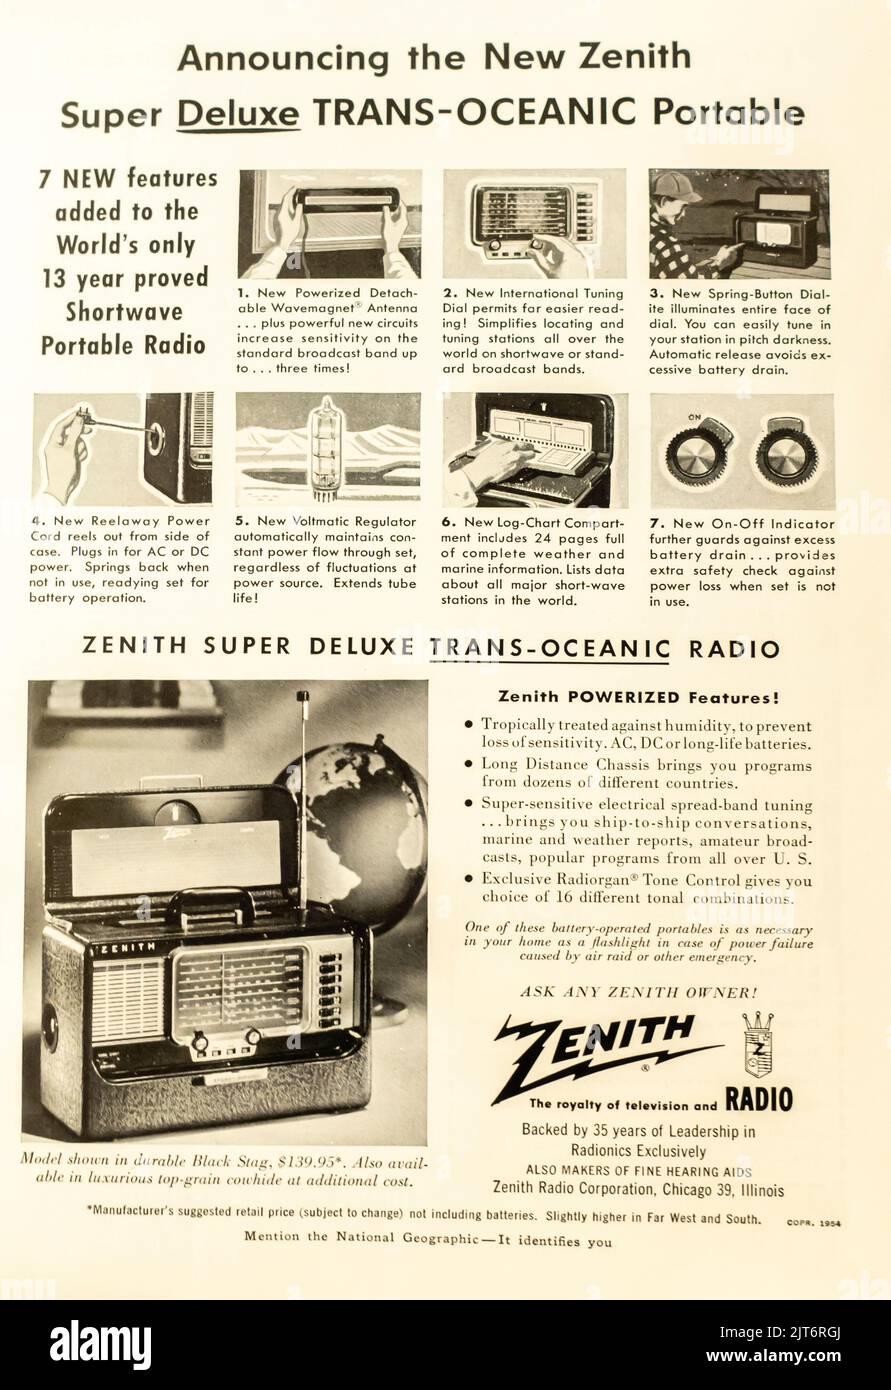 Zenith portable radio advertisement placed inside NatGeo magazine, 1954 Stock Photo